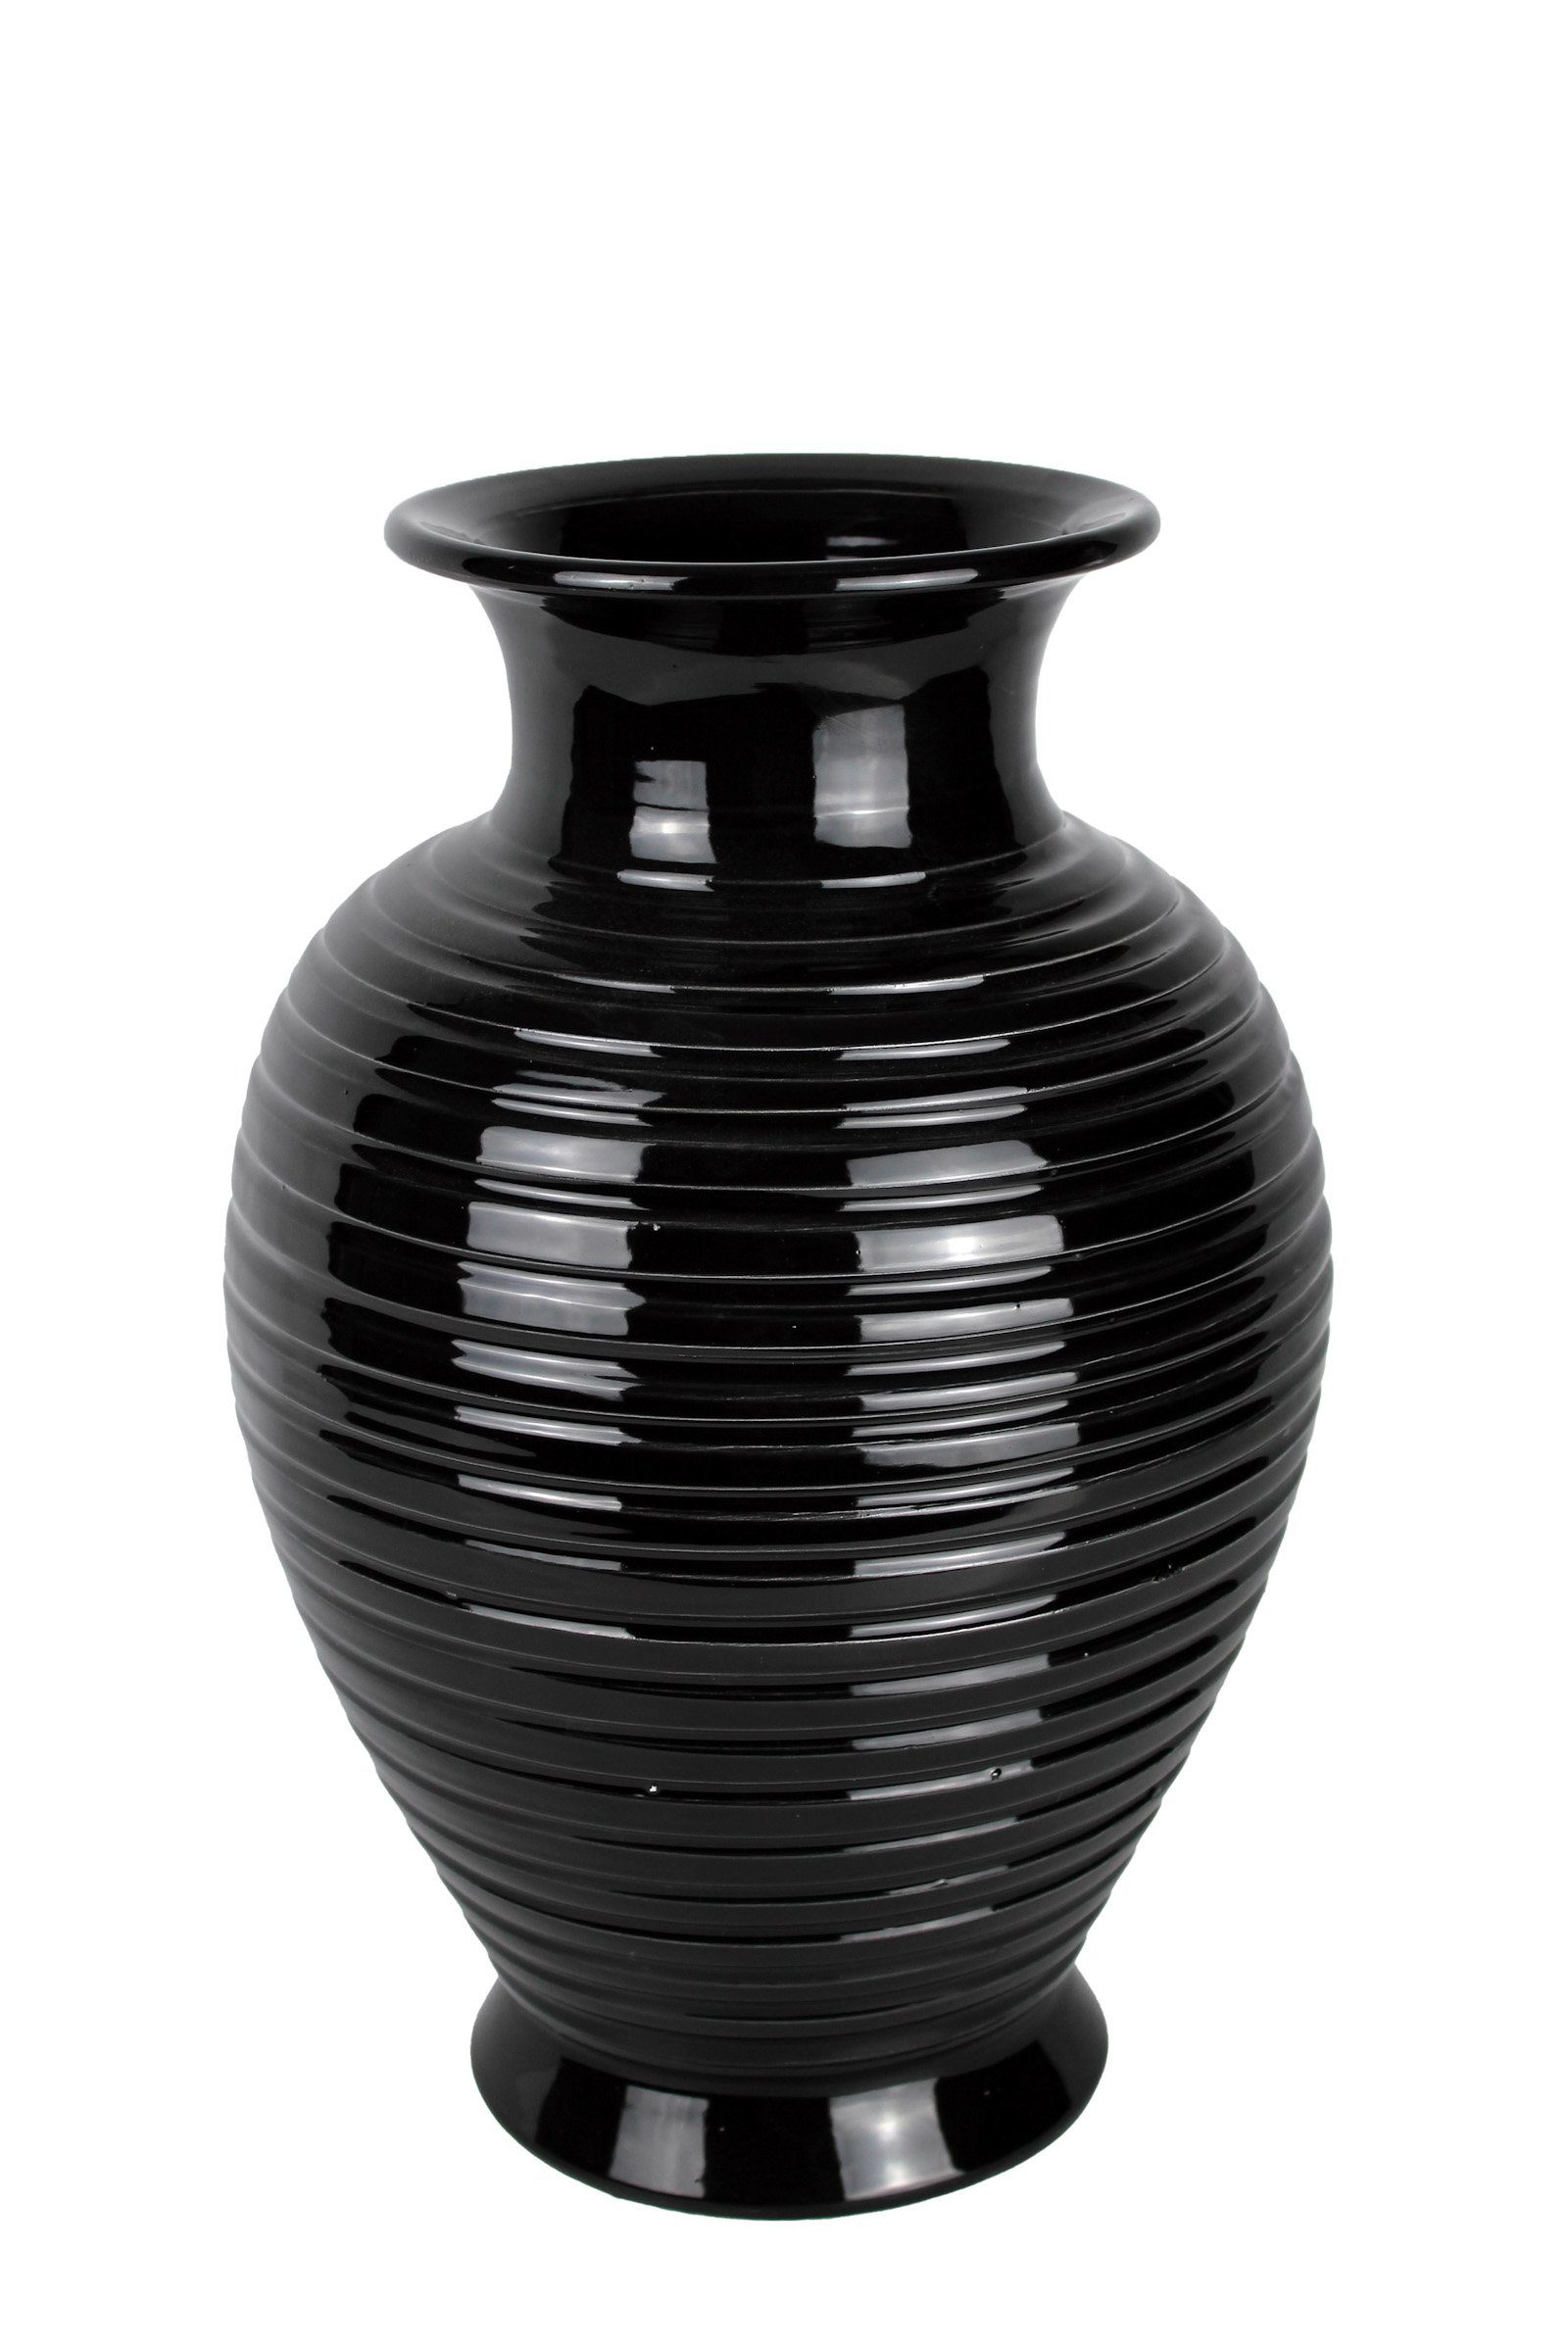 Vase Ringmuster Italien Home schwarz cm aus Signature Keramik Collection mit Stück, 1 Keramikvase), Keramik Handgefertigte Dekovase (1 36